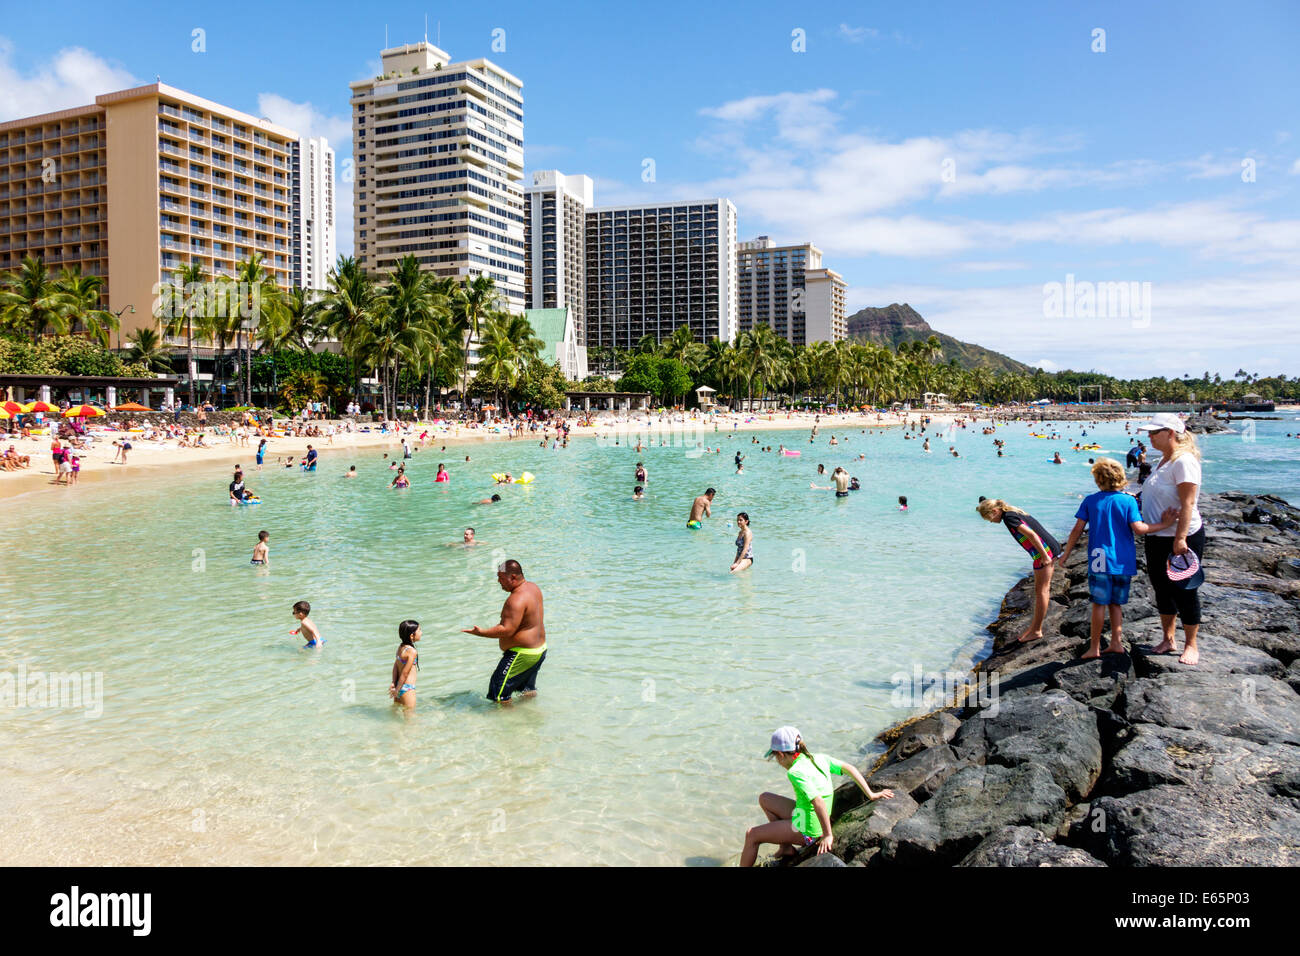 Honolulu Hawaii,Oahu,Hawaiian,Waikiki Beach,resort,Kuhio Beach state Park,Oceano Pacifico,solarium,famiglie,affollate,alte costruzioni,hotel,condomin Foto Stock